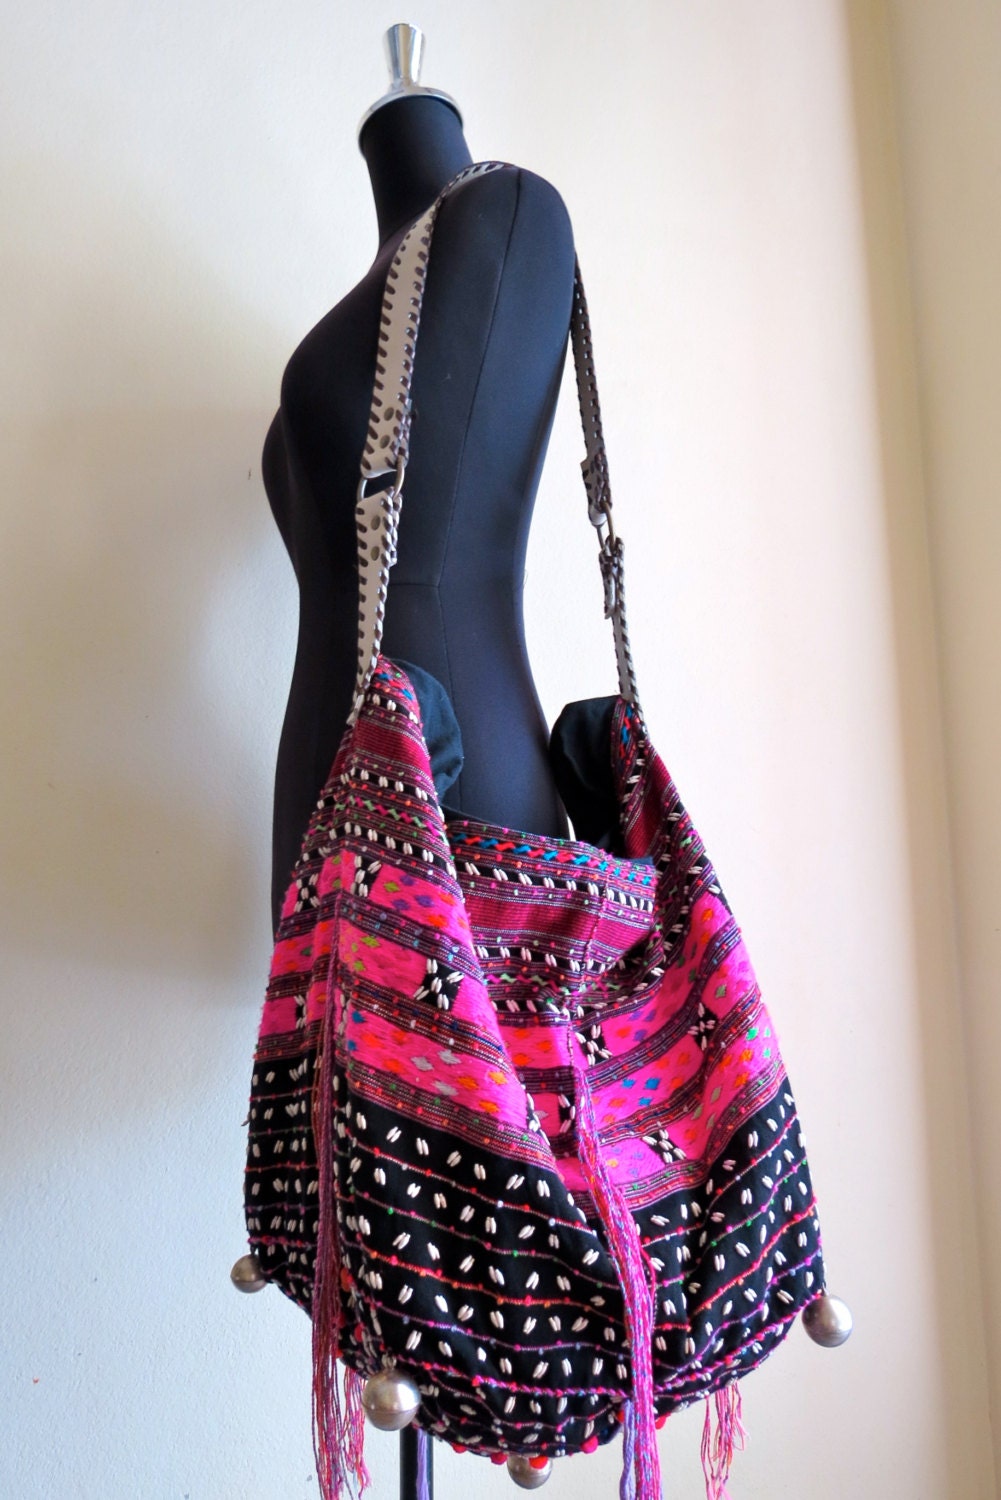 Ethnic Handmade Handbags vintage fabric Tote-bohemian bags